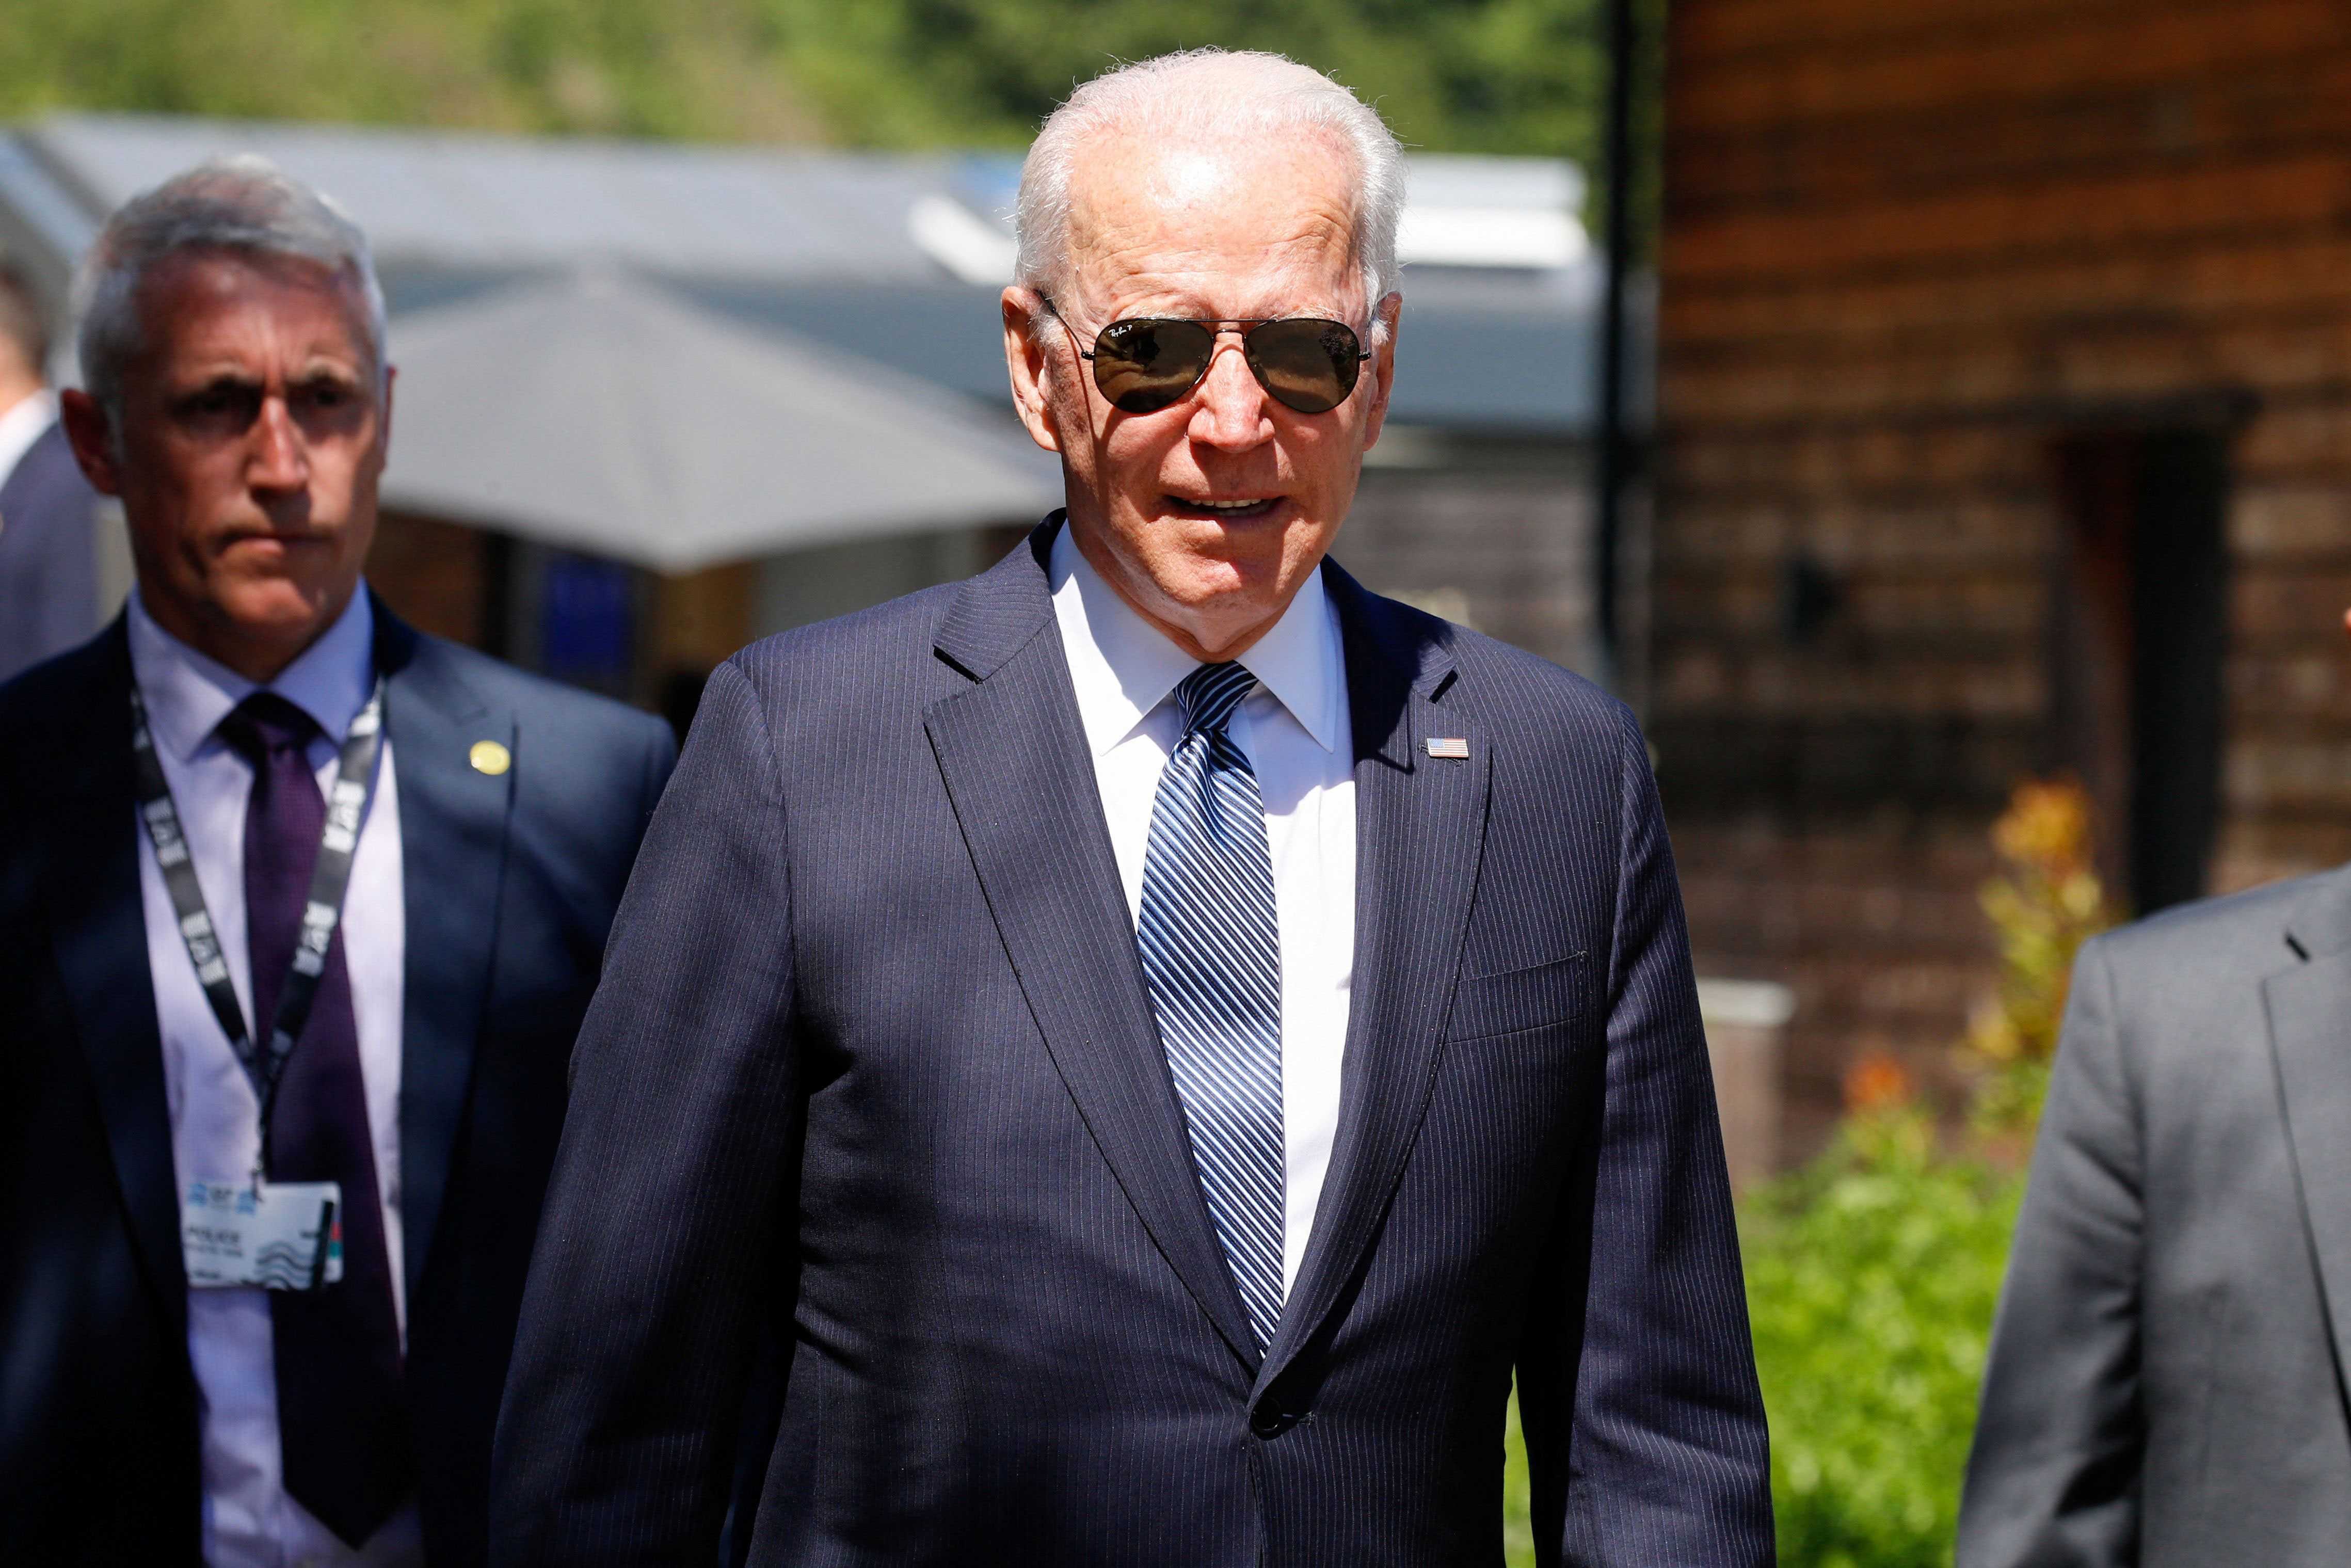 United States President Joe Biden arrives for a plenary session in Carbis Bay, England, on June 13.